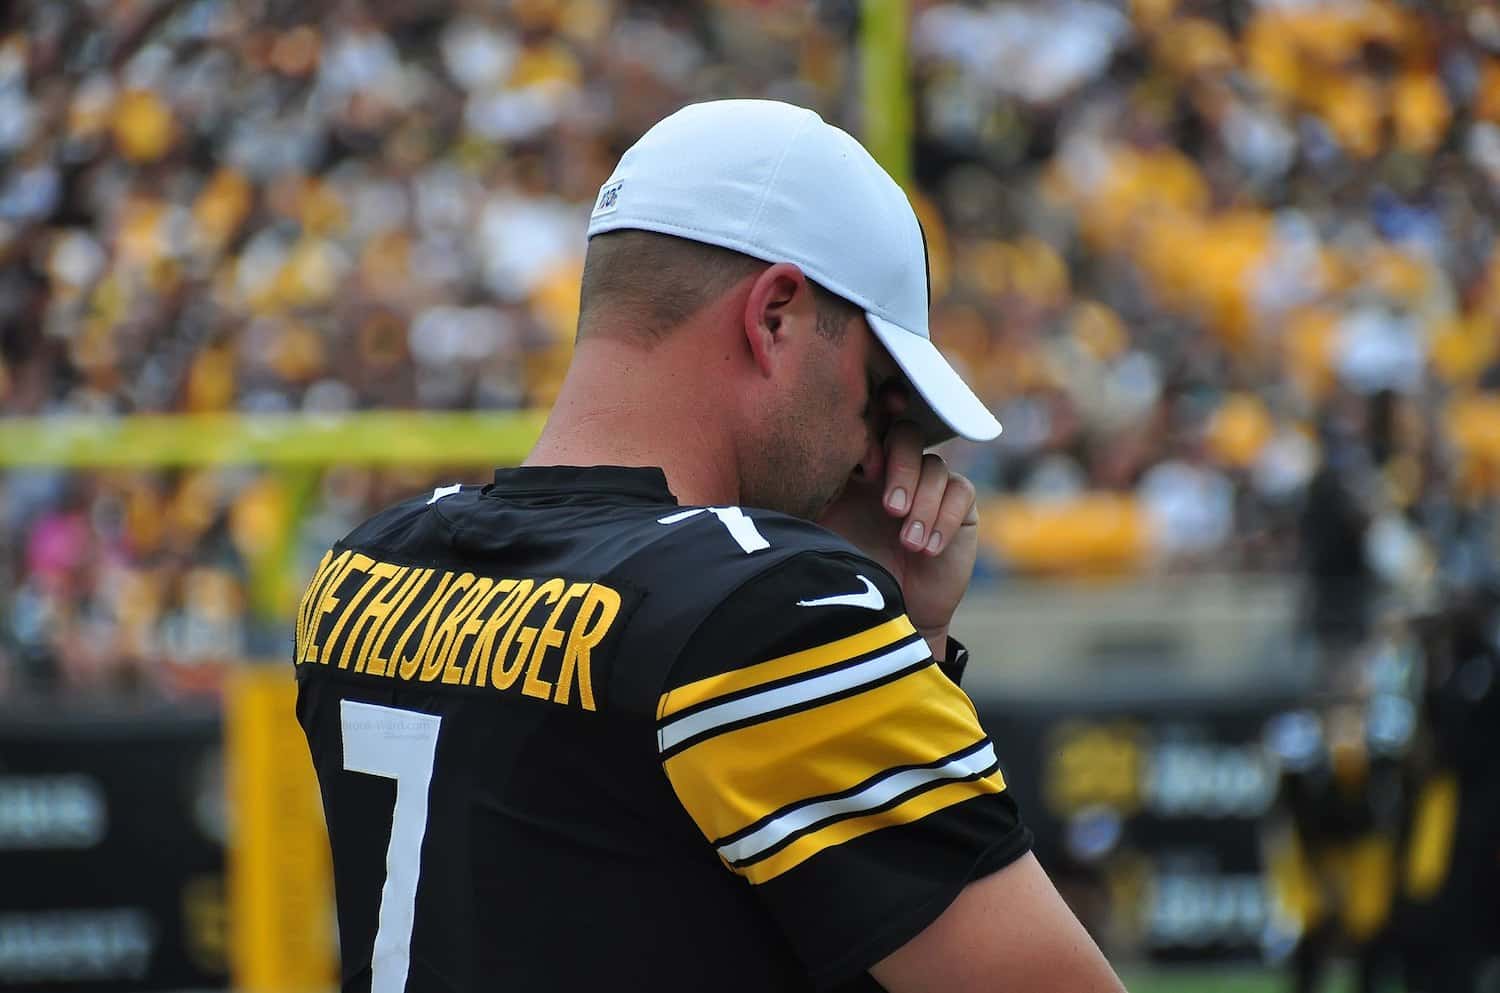 Pittsburgh Steelers Quarterback Ben Roethlisberger. Photo Credit: Brook Ward | Under Creative Commons License